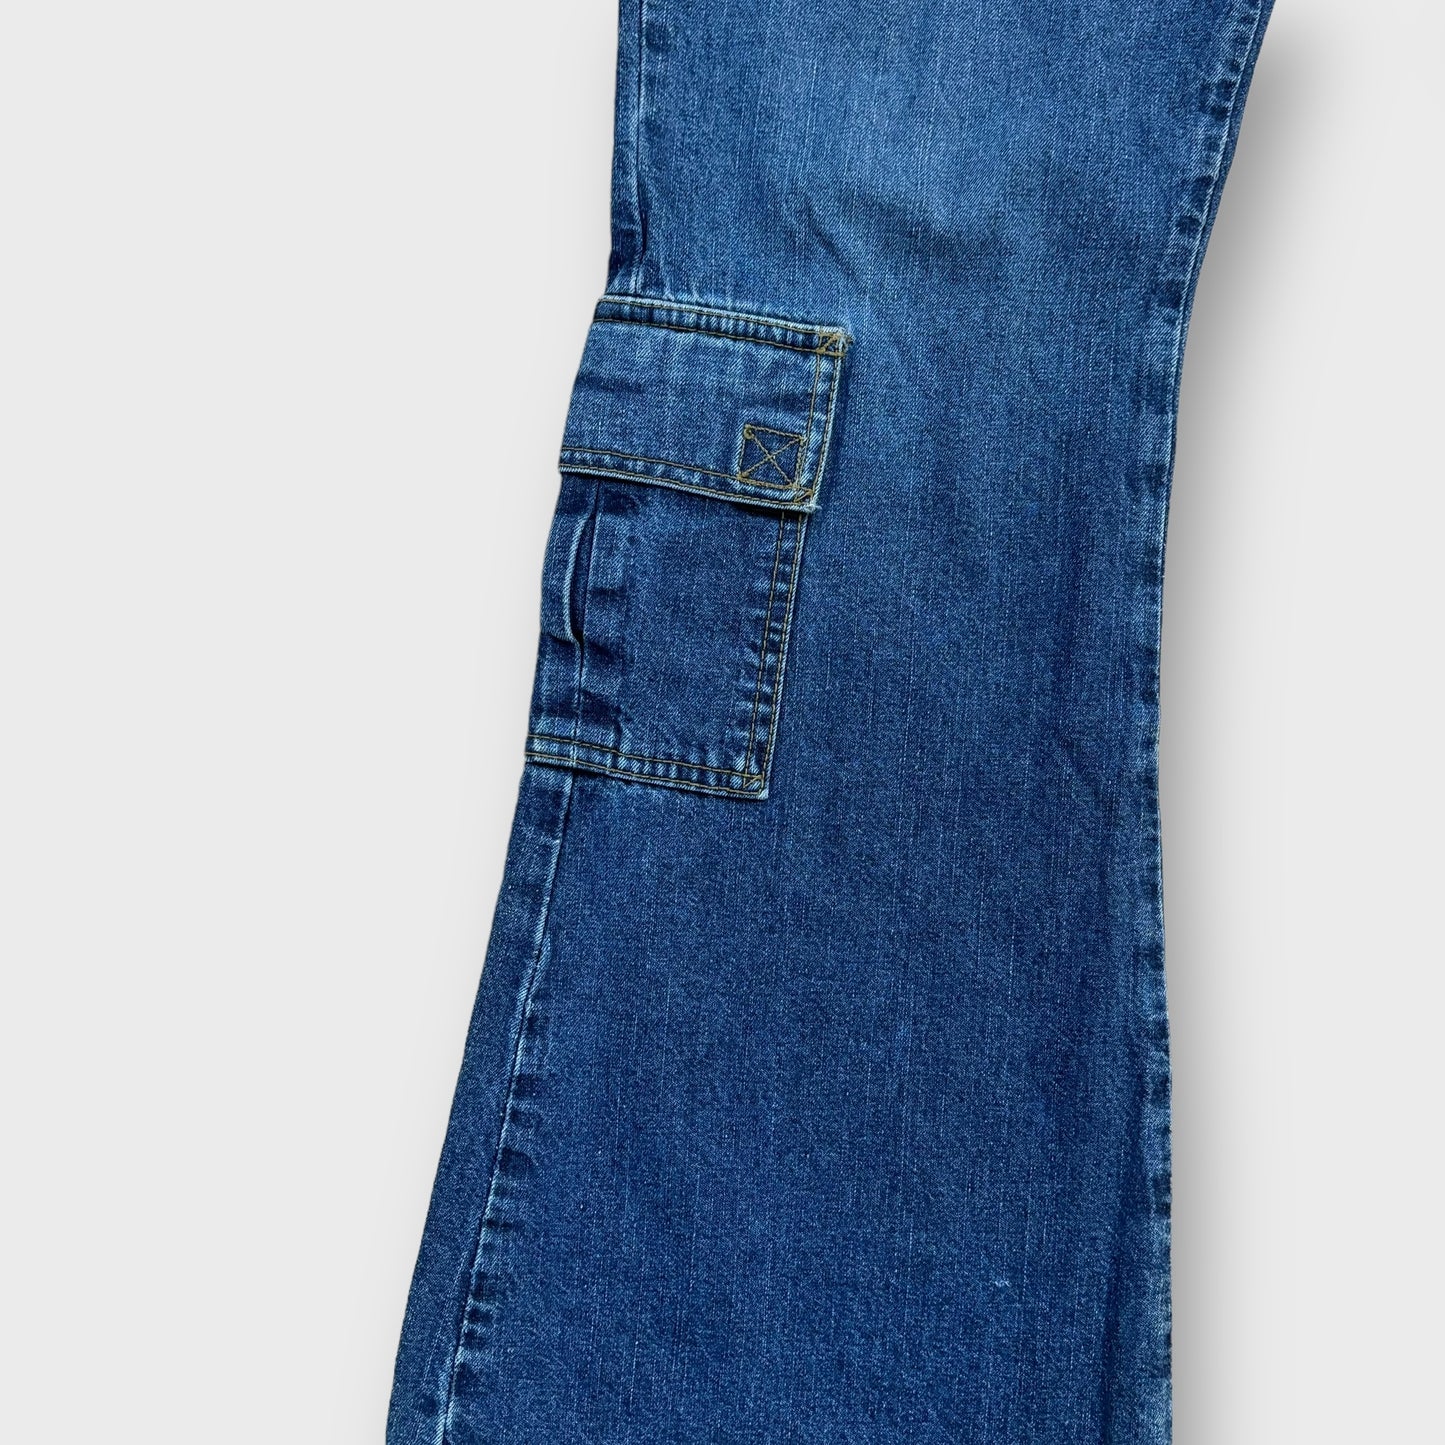 "Mudd jeans" flare denim pants